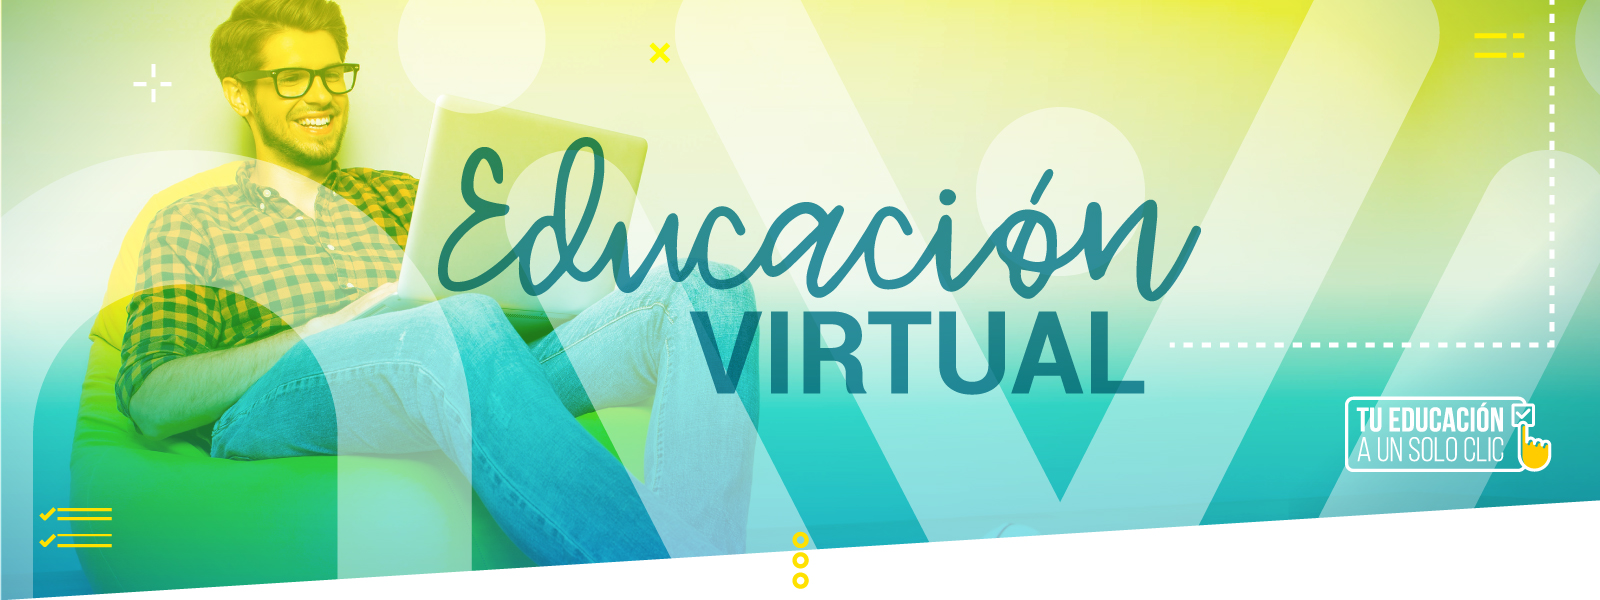 Banner-Educacion-virtual-2021